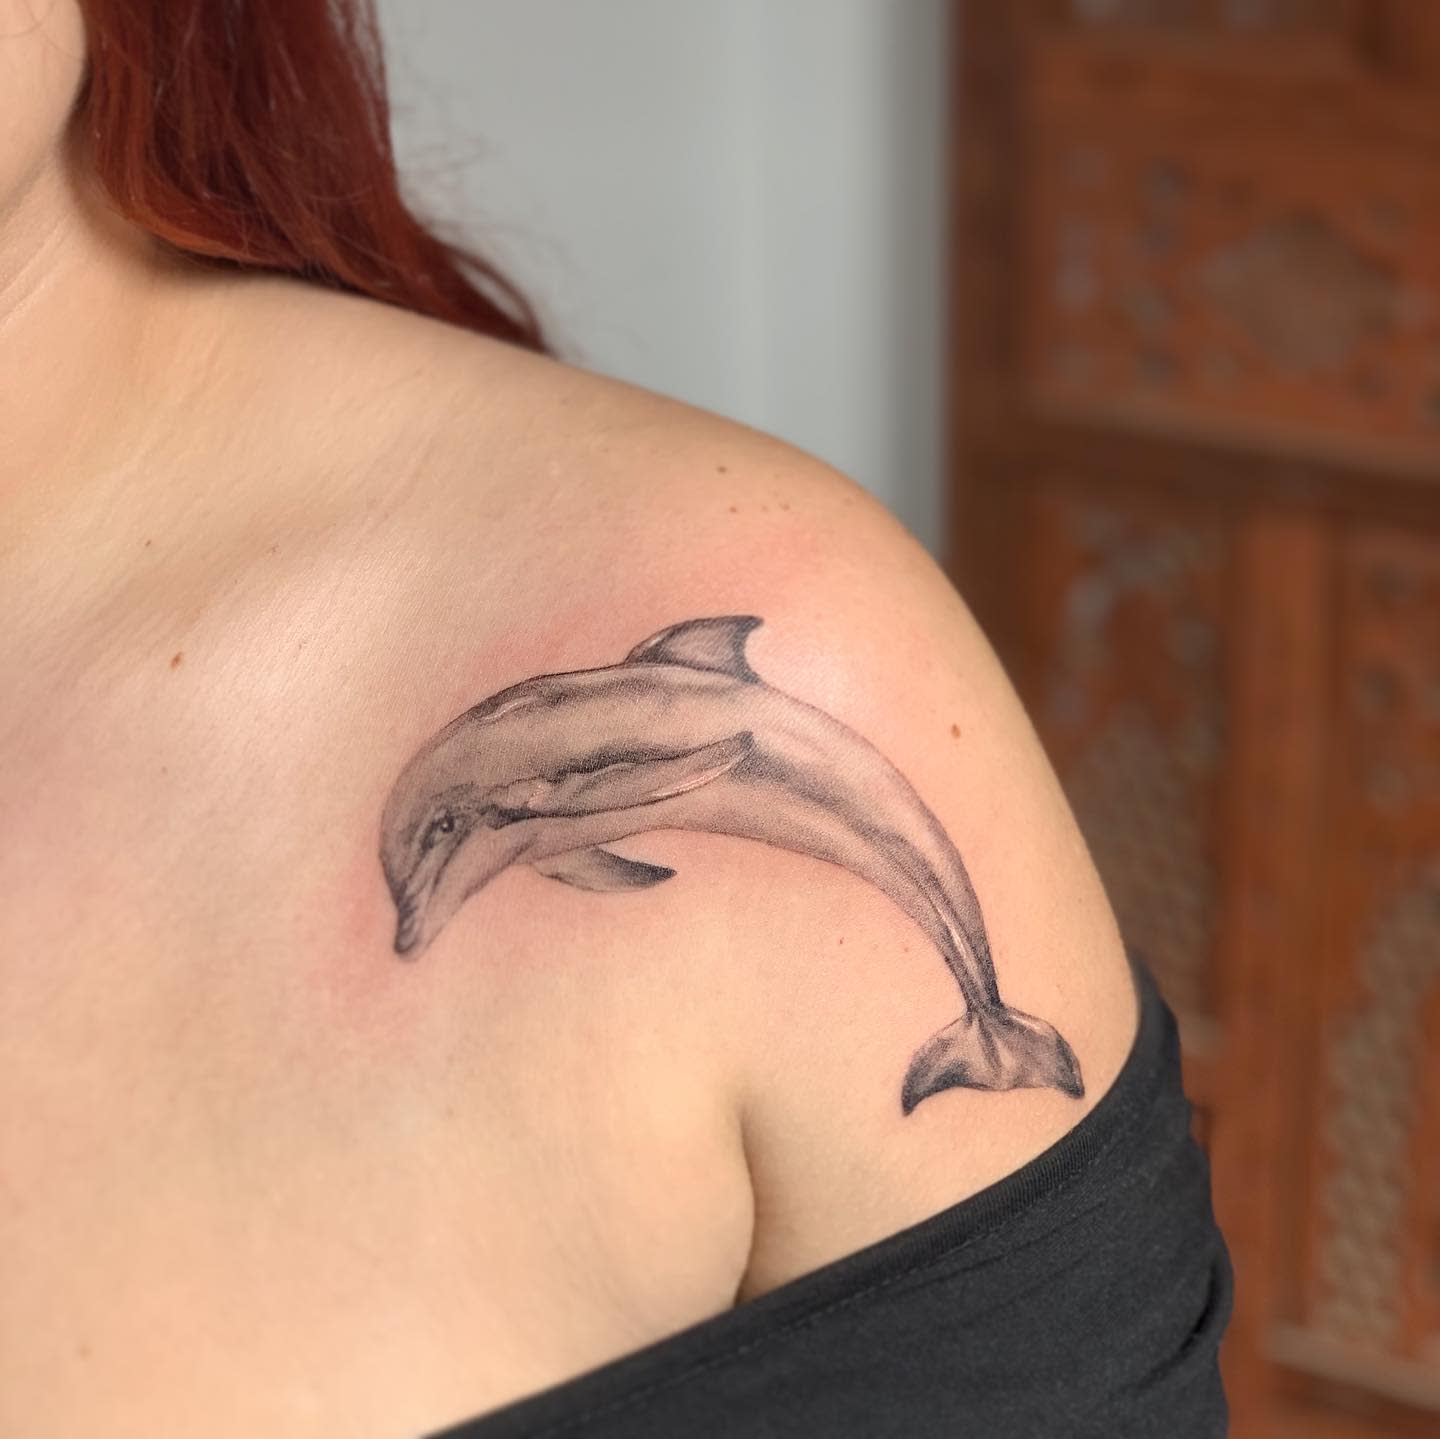 40 Stunning Dolphin Tattoo Designs and Ideas